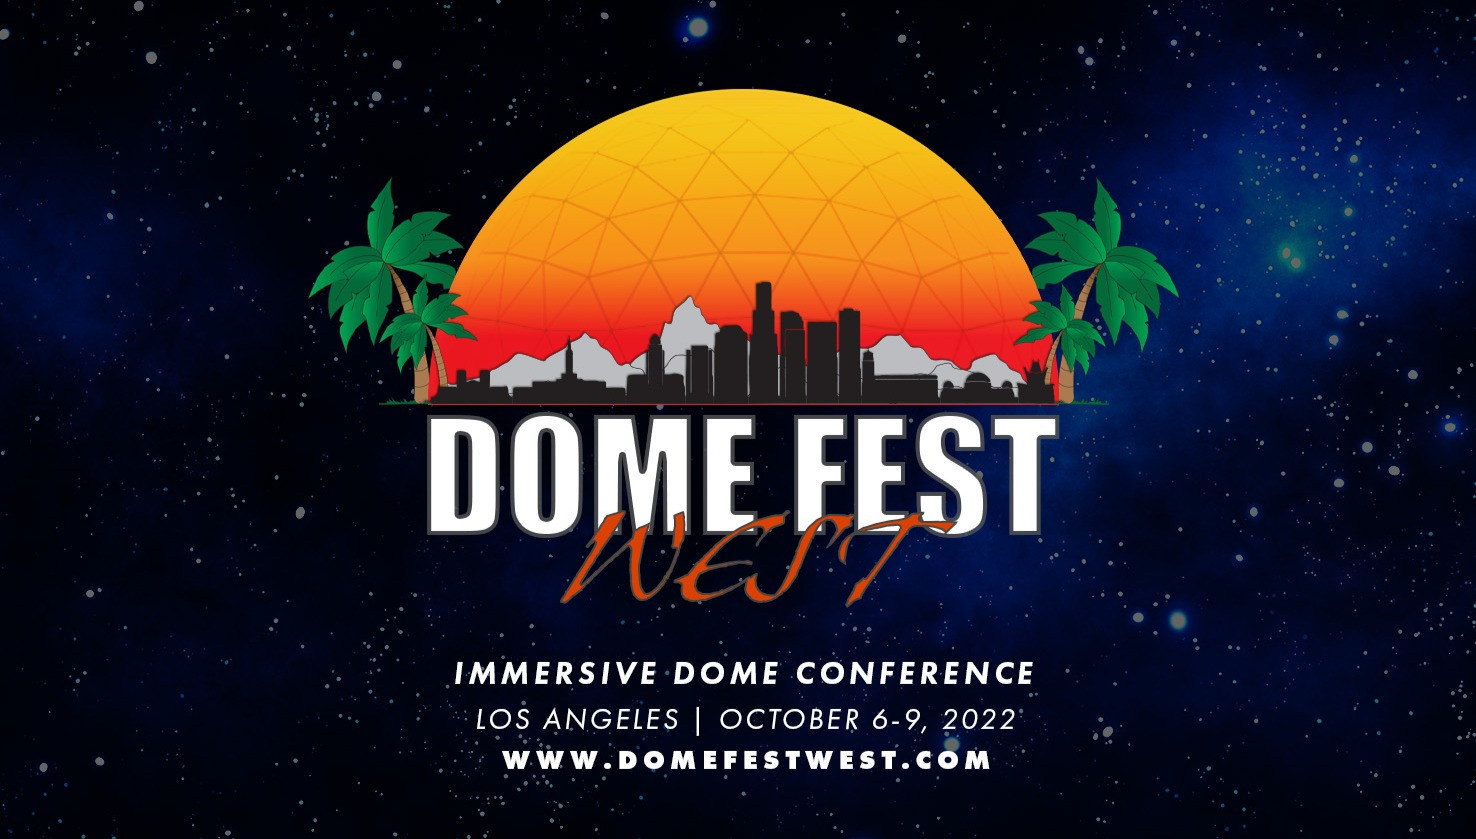 Dome Fest West | Immersive Cinema Film Festival